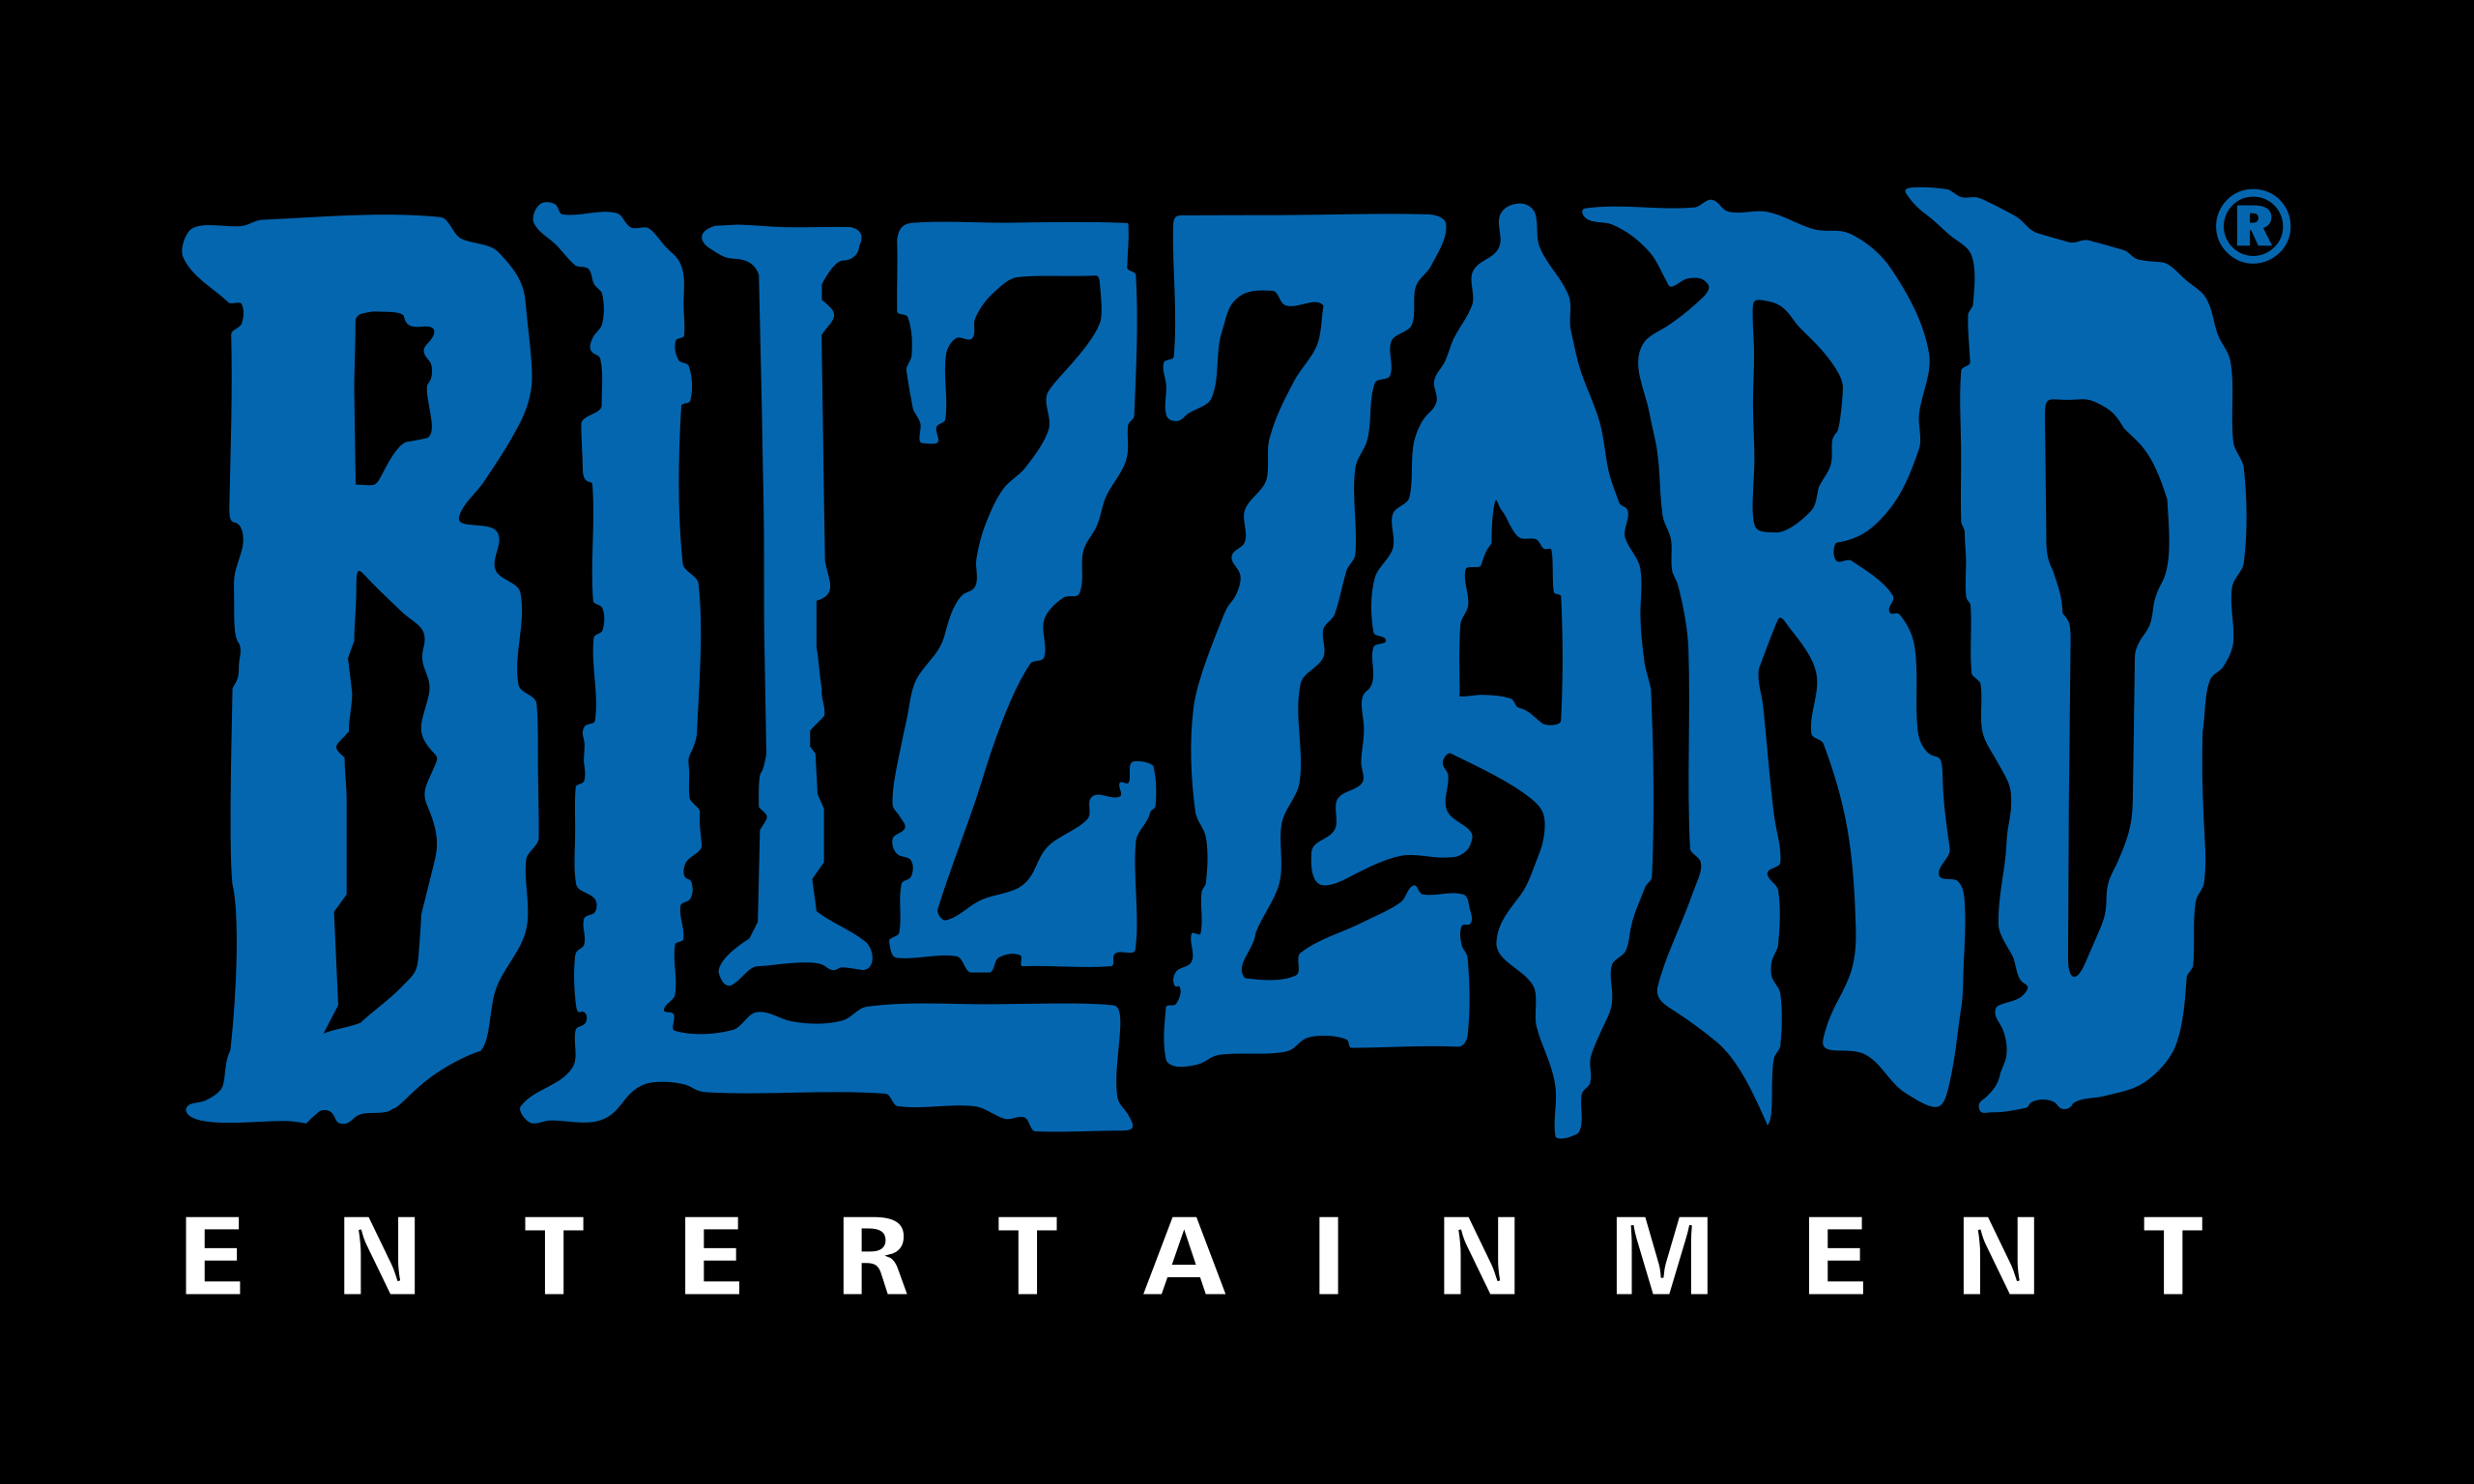 Blizzard non erit nomen characteres post realem populum!